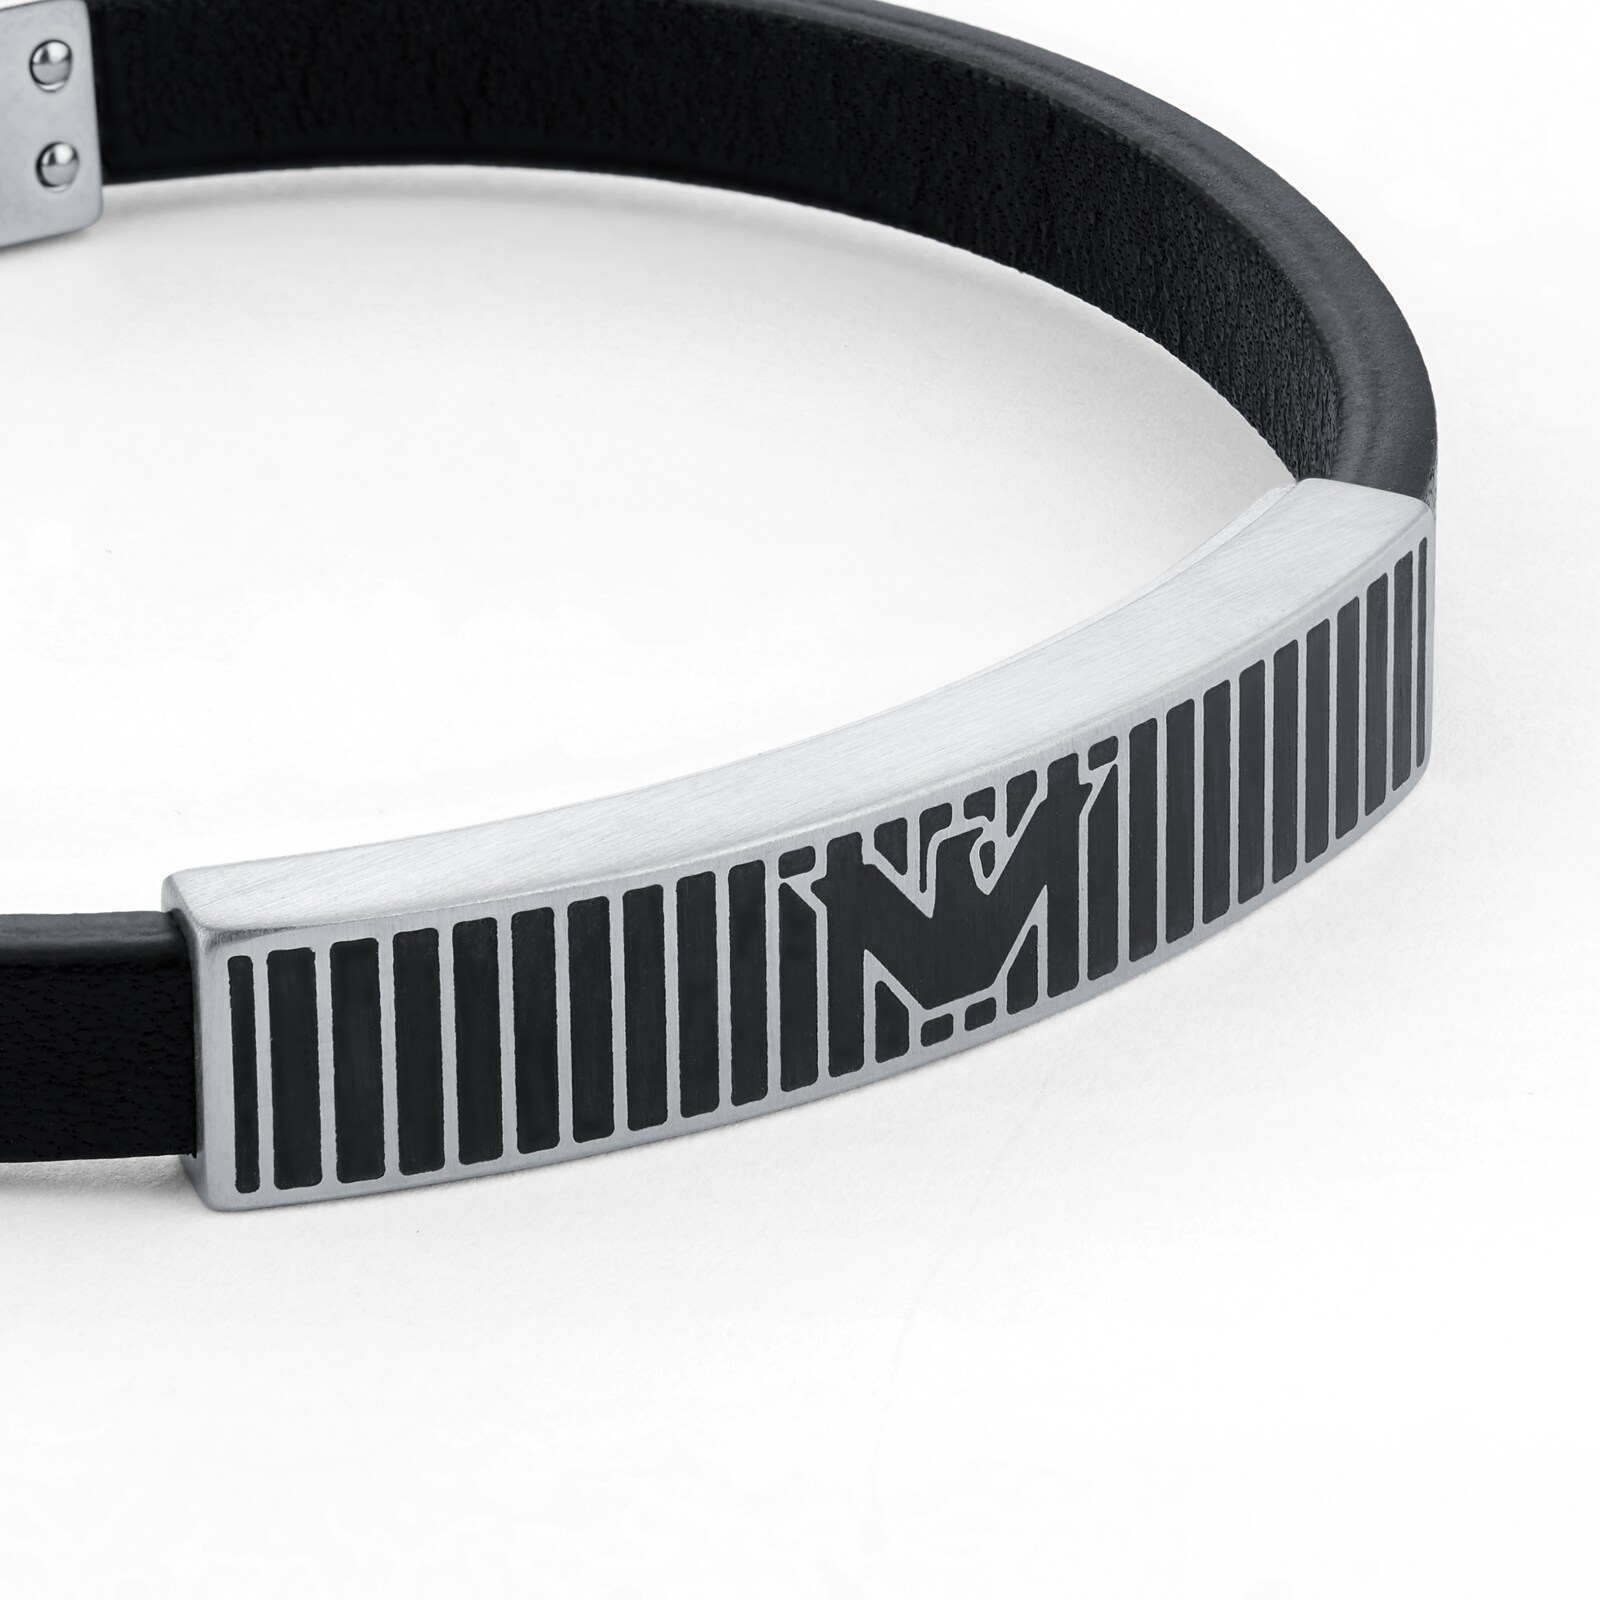 Emporio Armani Bracelet for Men , black Stainless Steel Bracelet,  EGS1624001 : Amazon.co.uk: Fashion